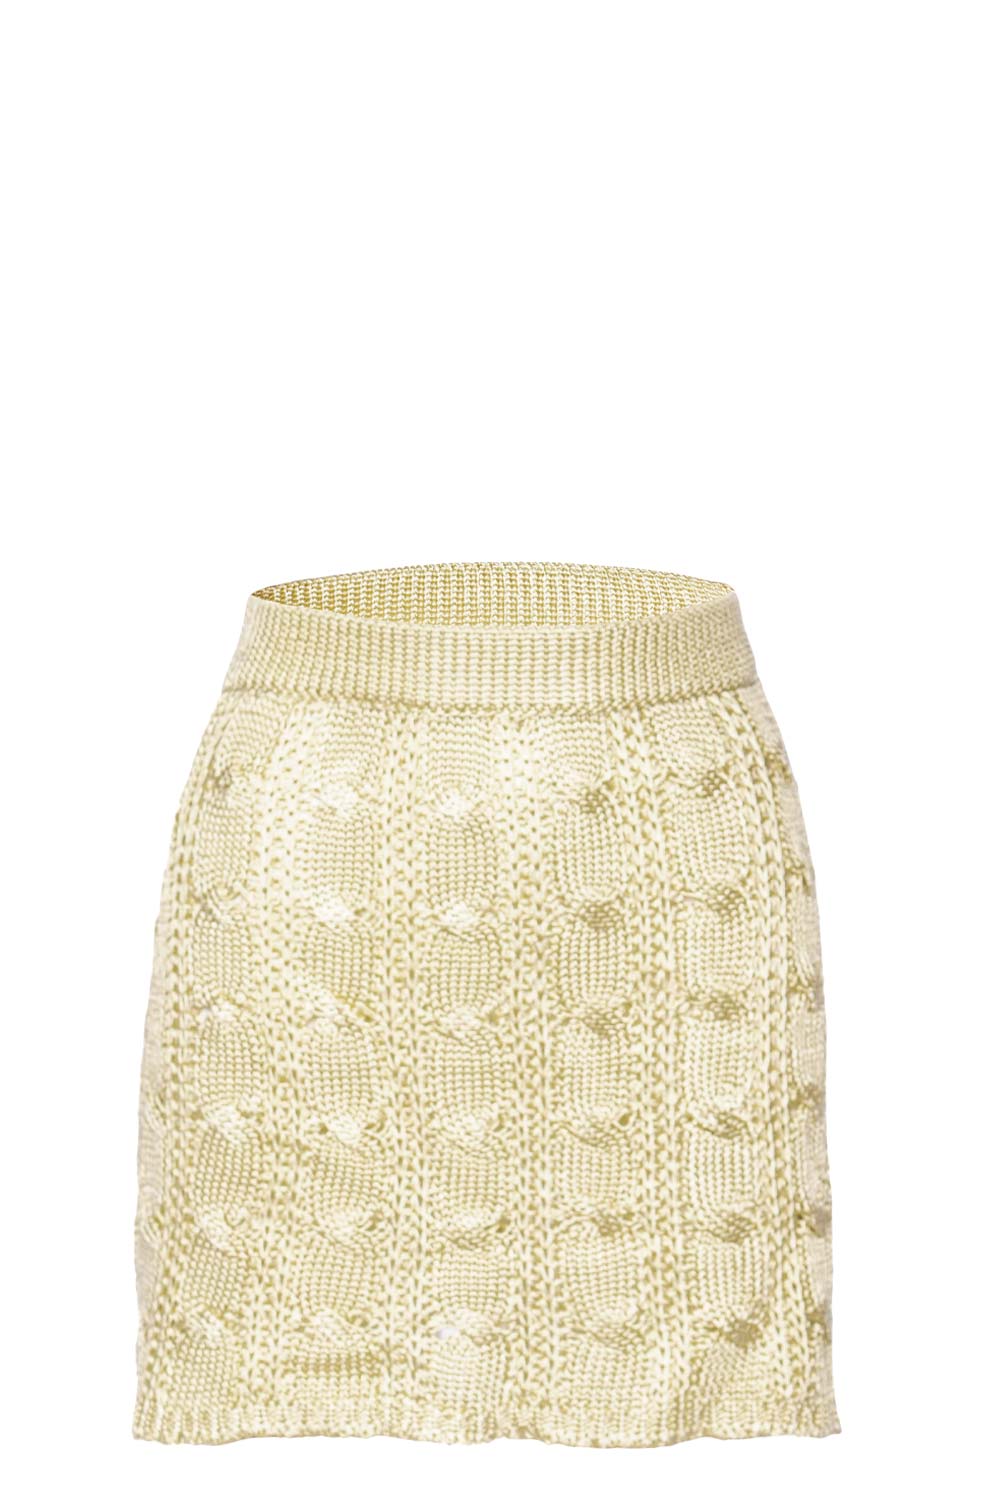 Calle Del Mar Jasmine Chunky Cable Knit Mini Skirt